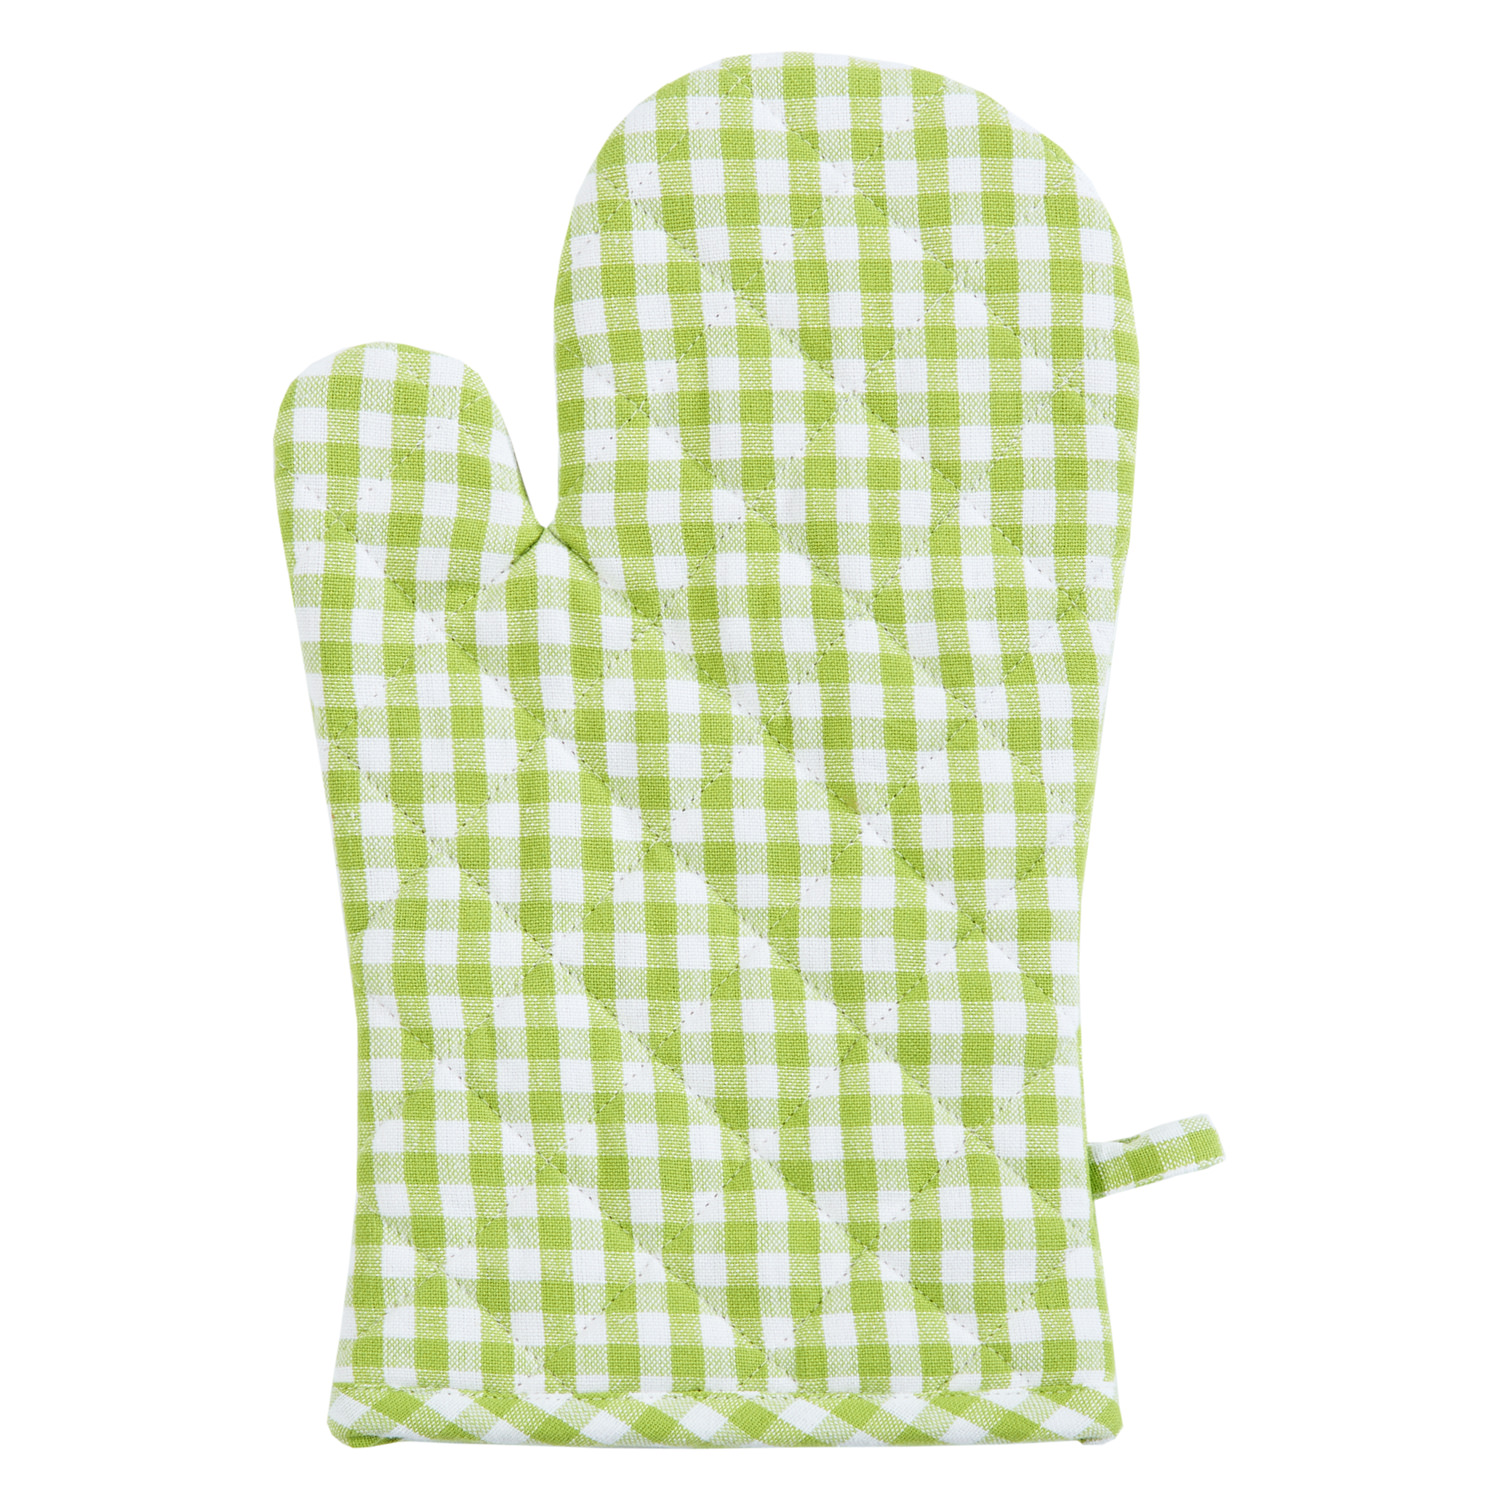 Handschuh (PSA) vichy - Farbe anis